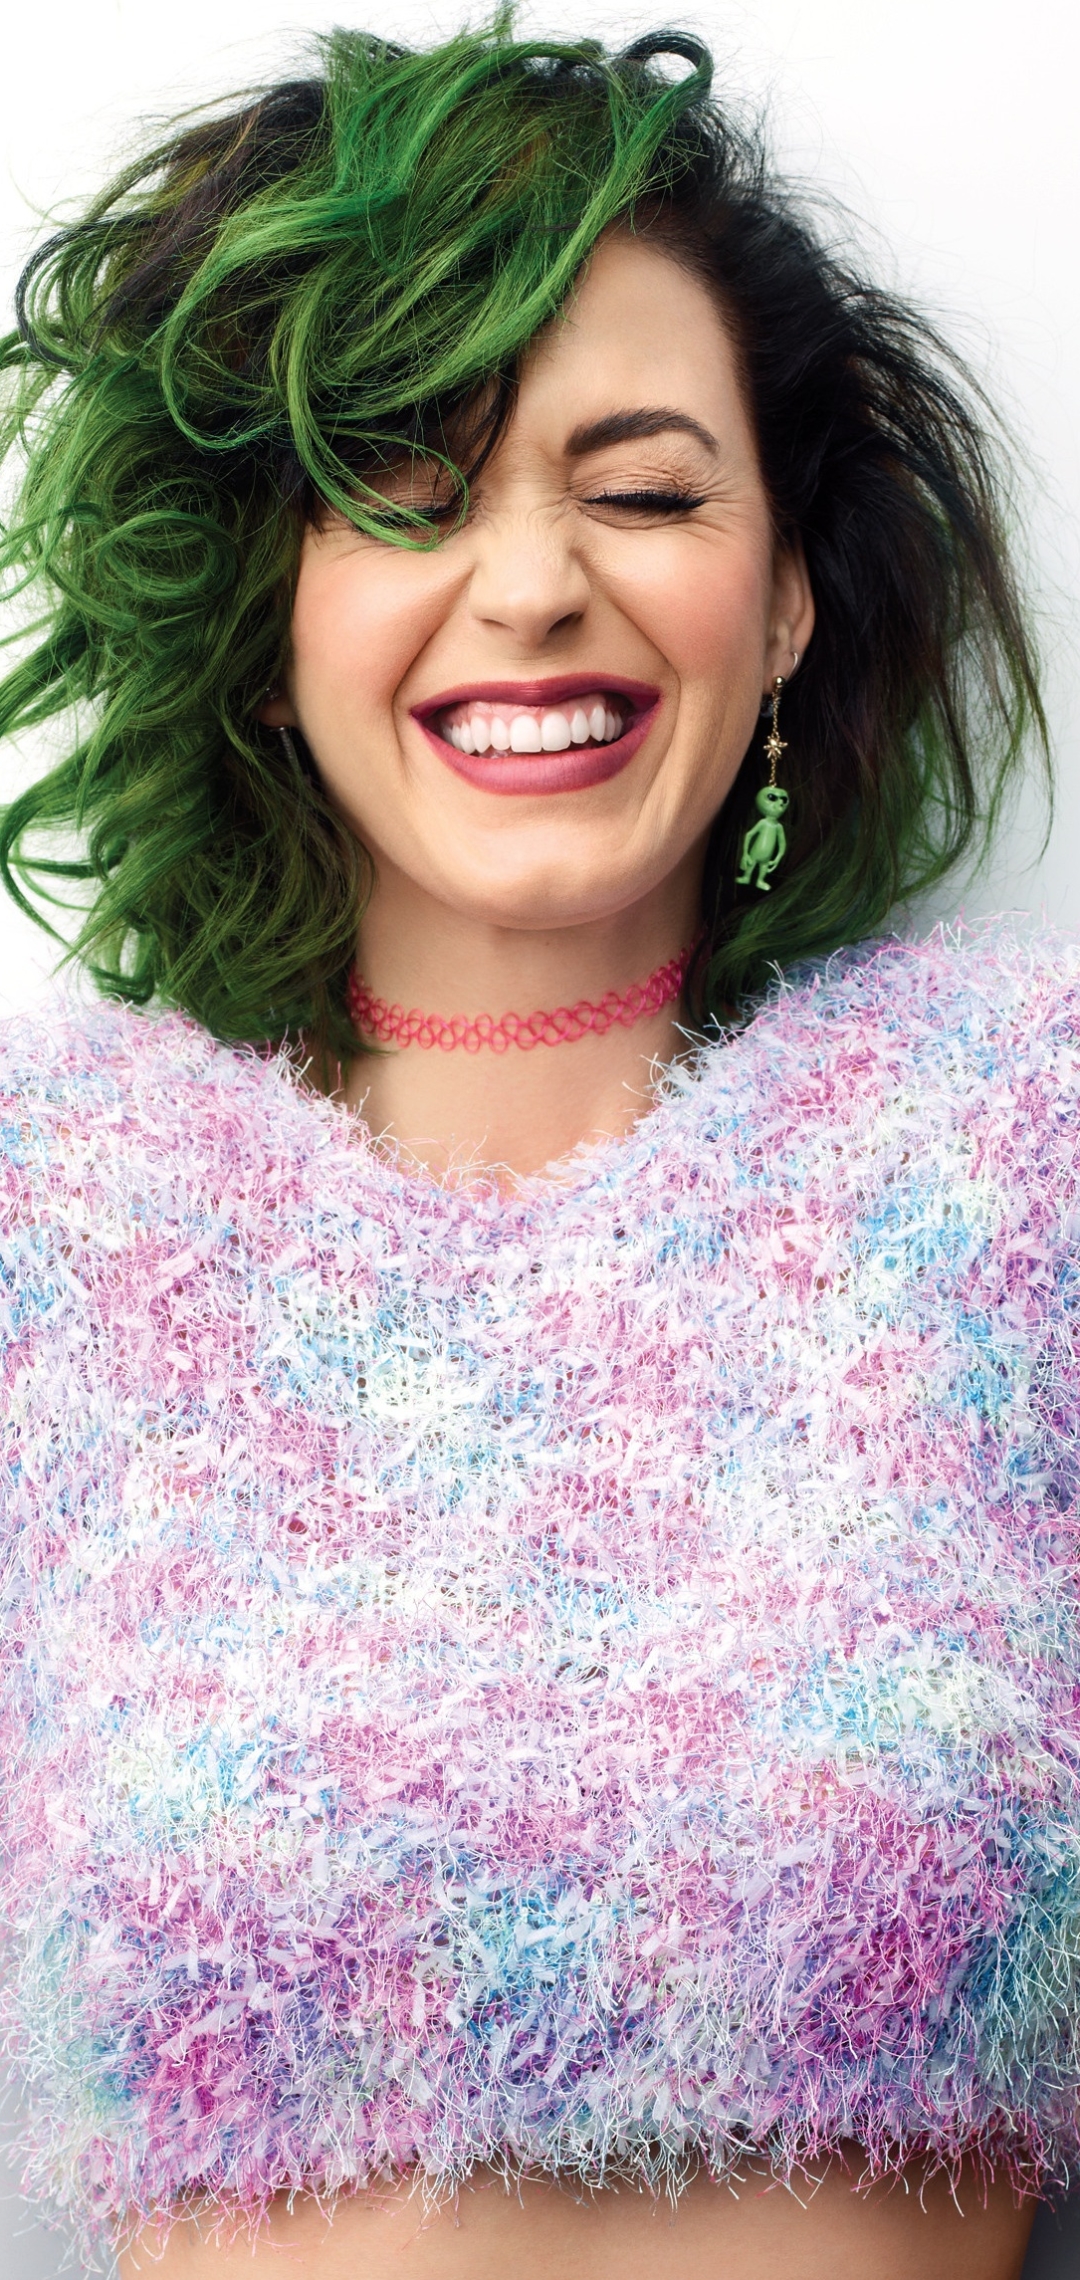 Handy-Wallpaper Musik, Katy Perry, Grüne Haare kostenlos herunterladen.